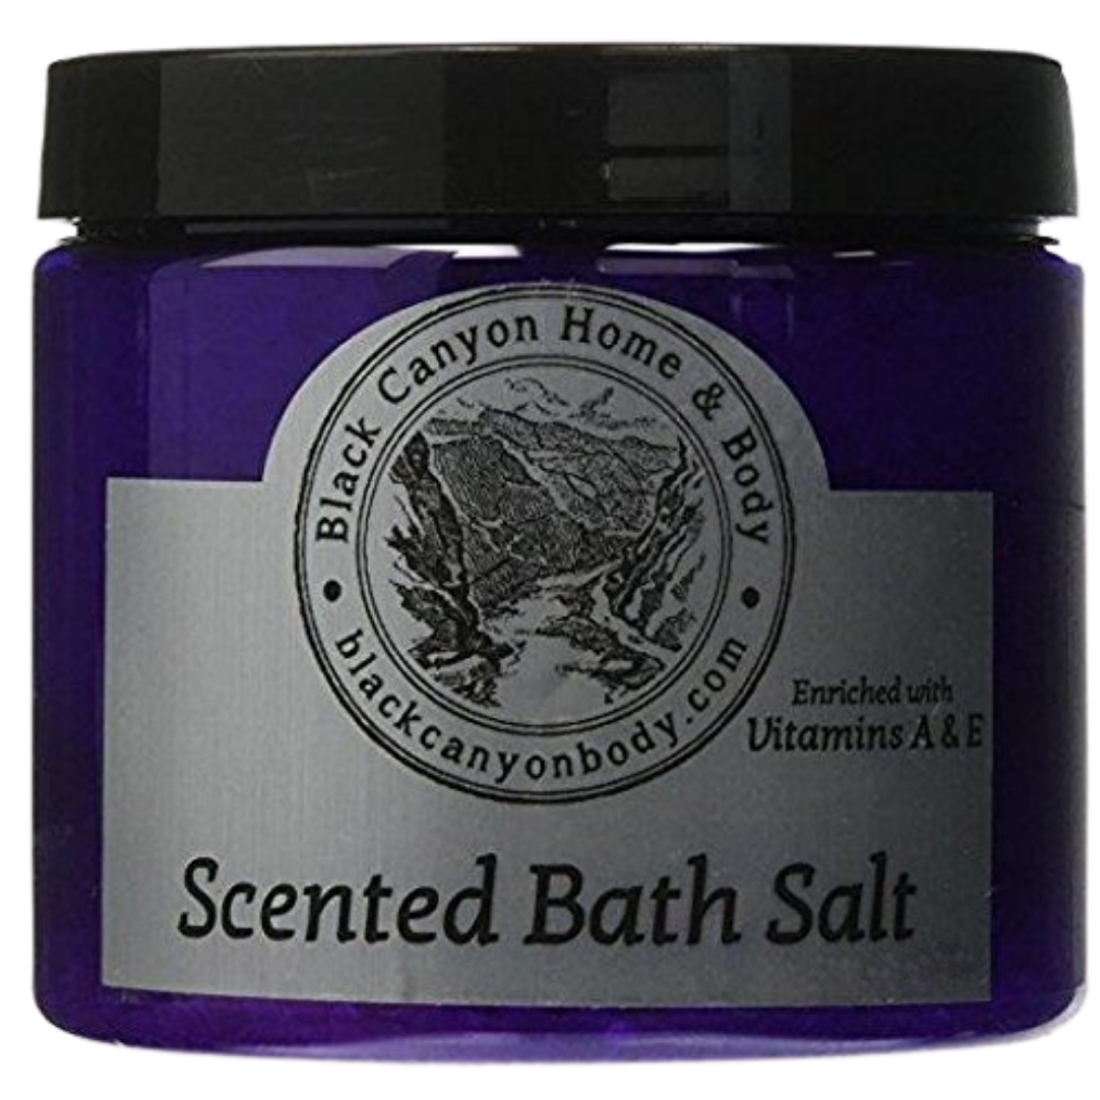 Black Canyon Autumn Spiced Fir Scented Sea Salt Bath Soak